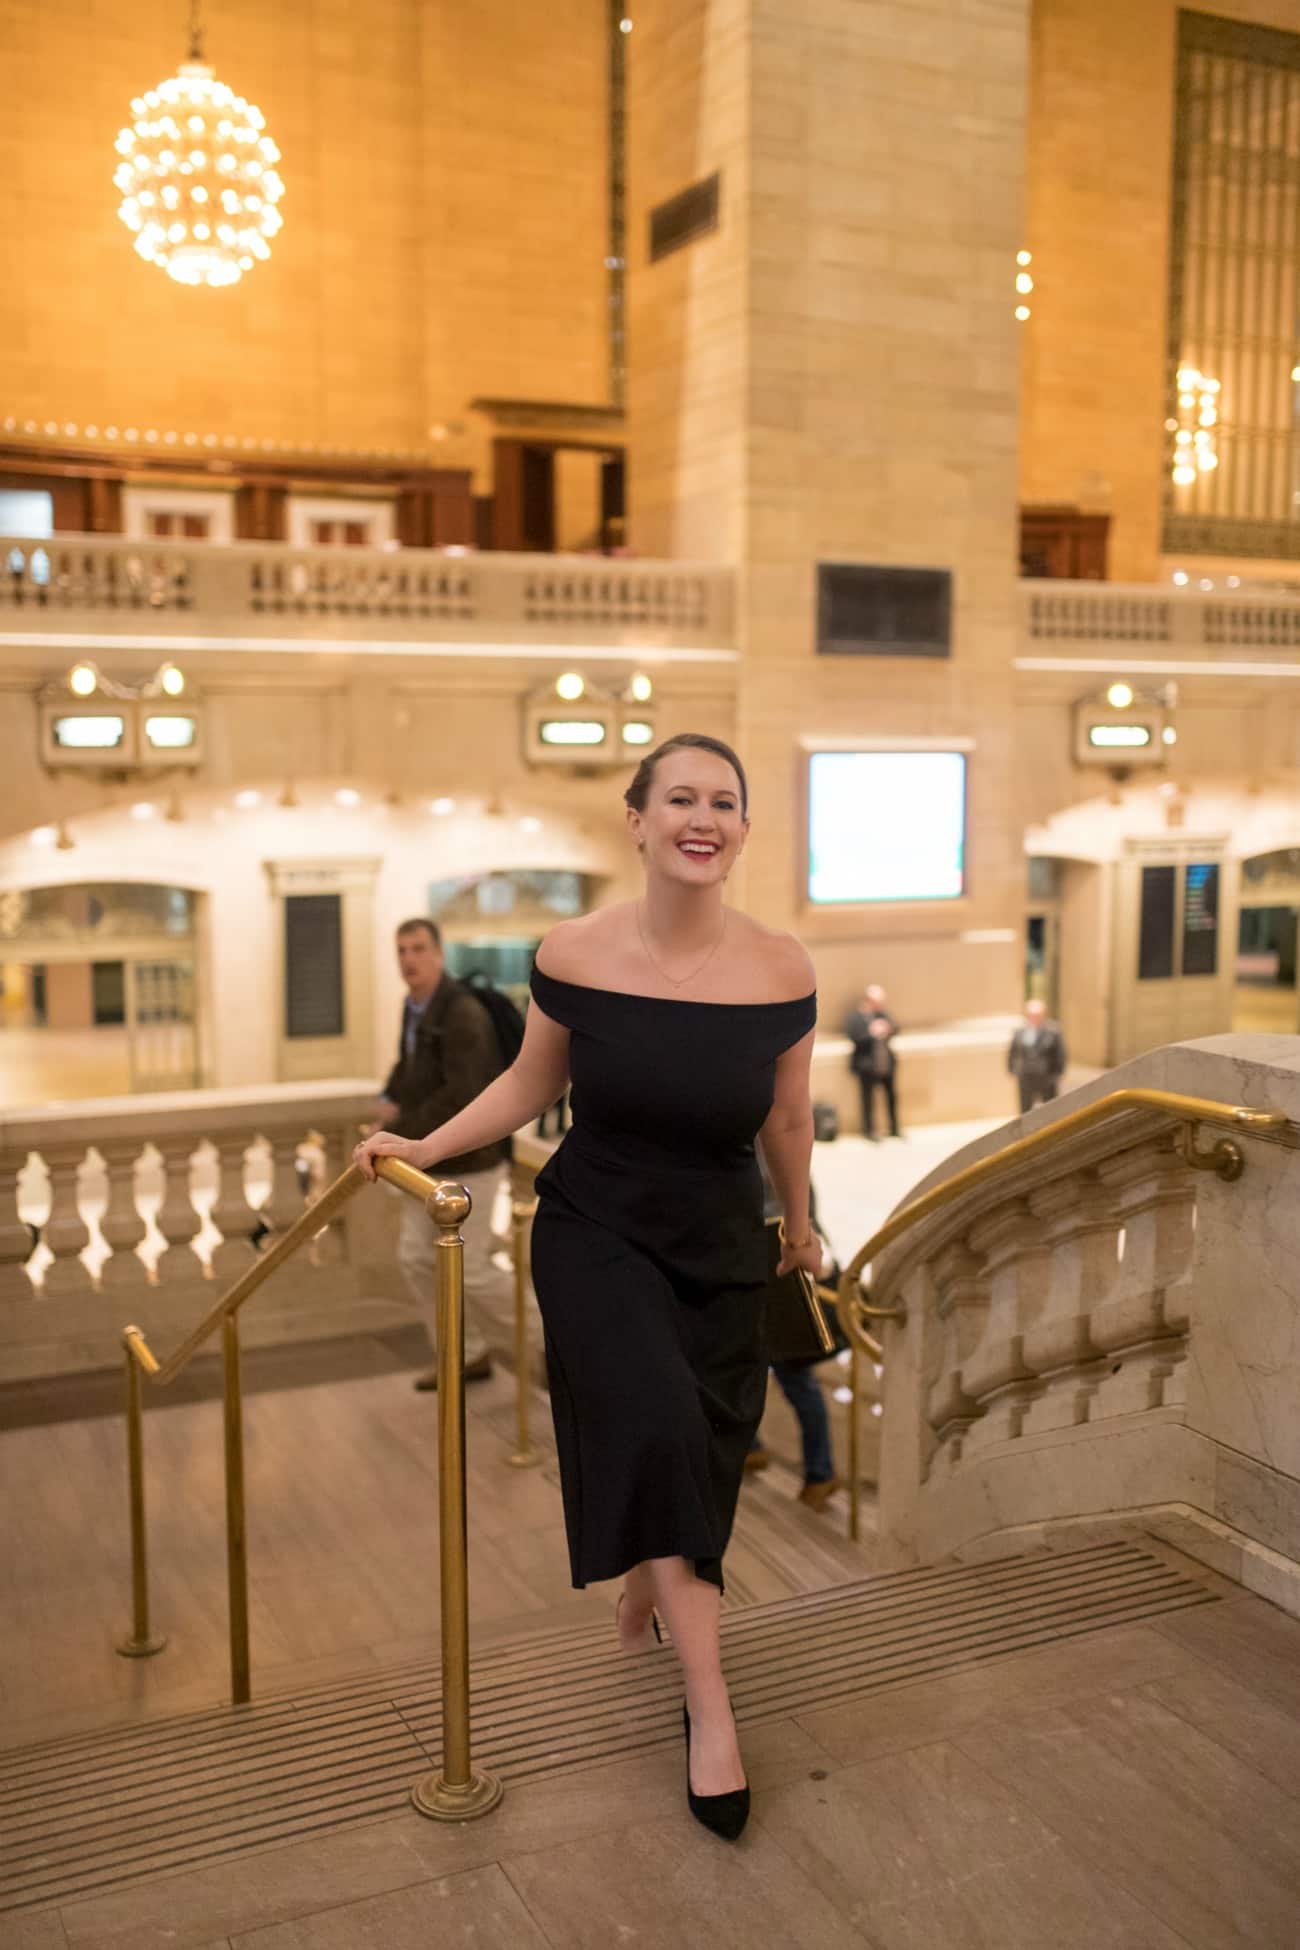 Little Black Dress in Grand Central Station I wit & whimsy